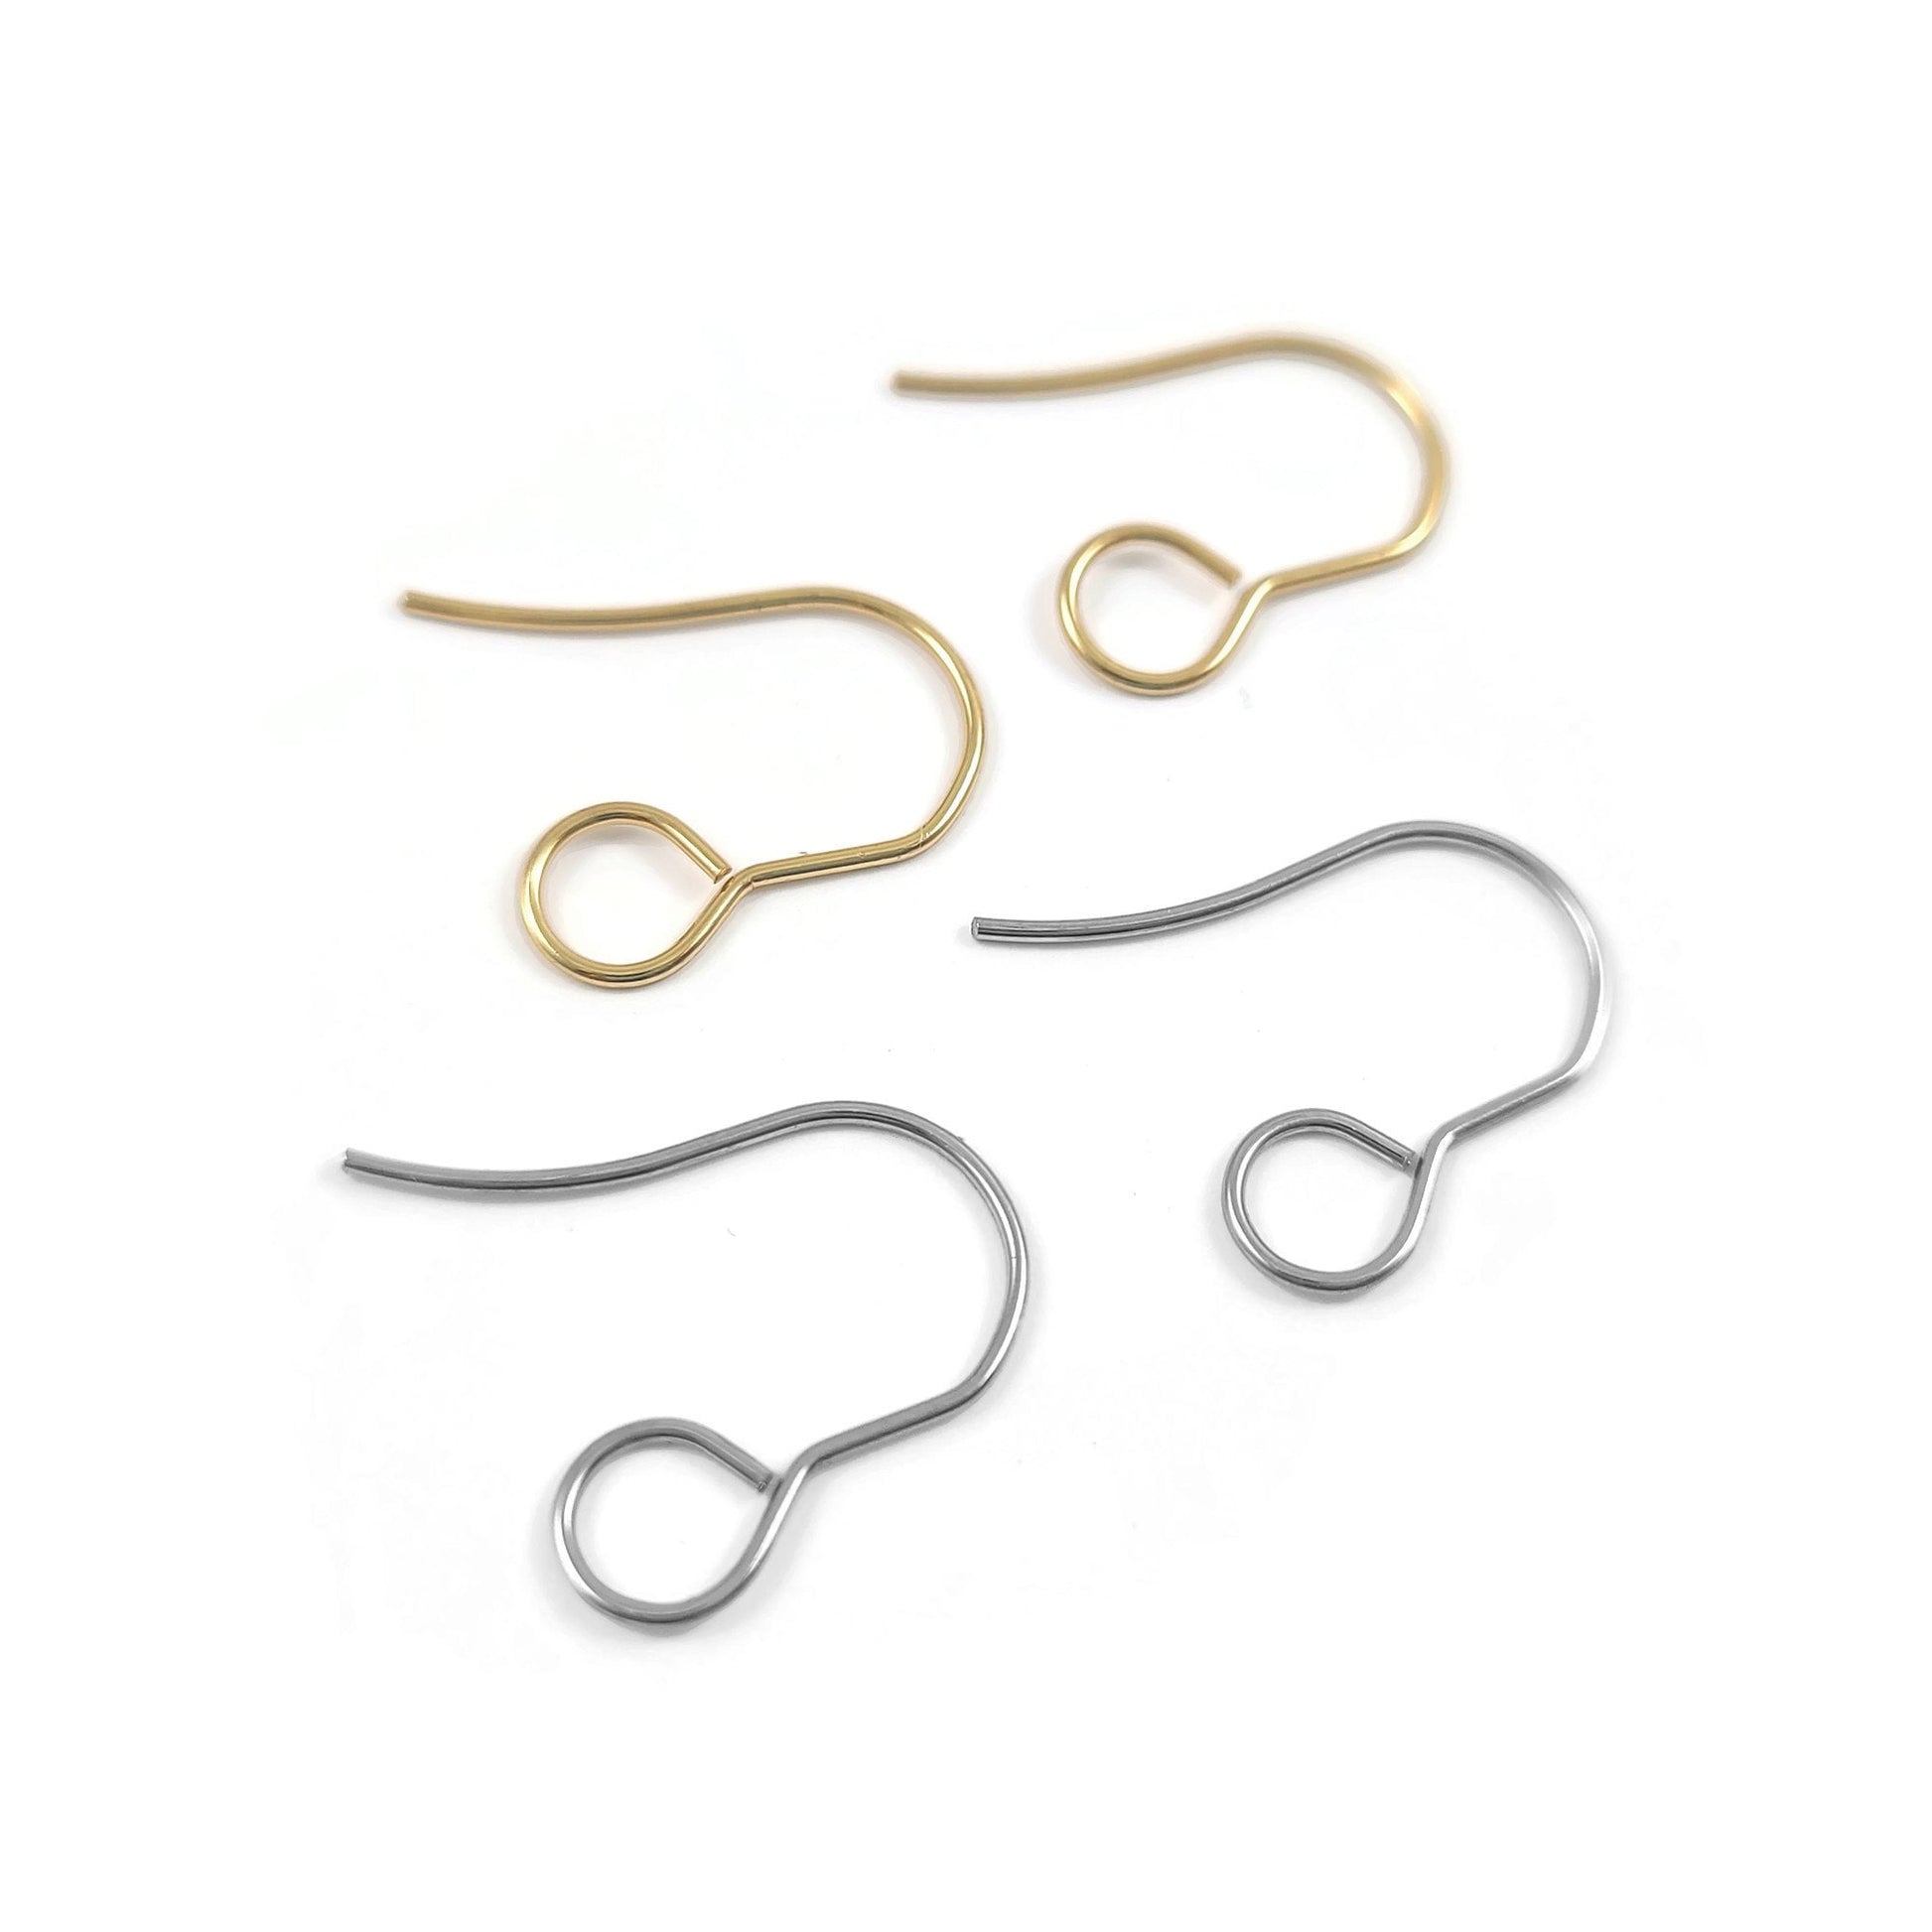 Big hole loop ear wire, Surgical steel hooks, Earring making findings